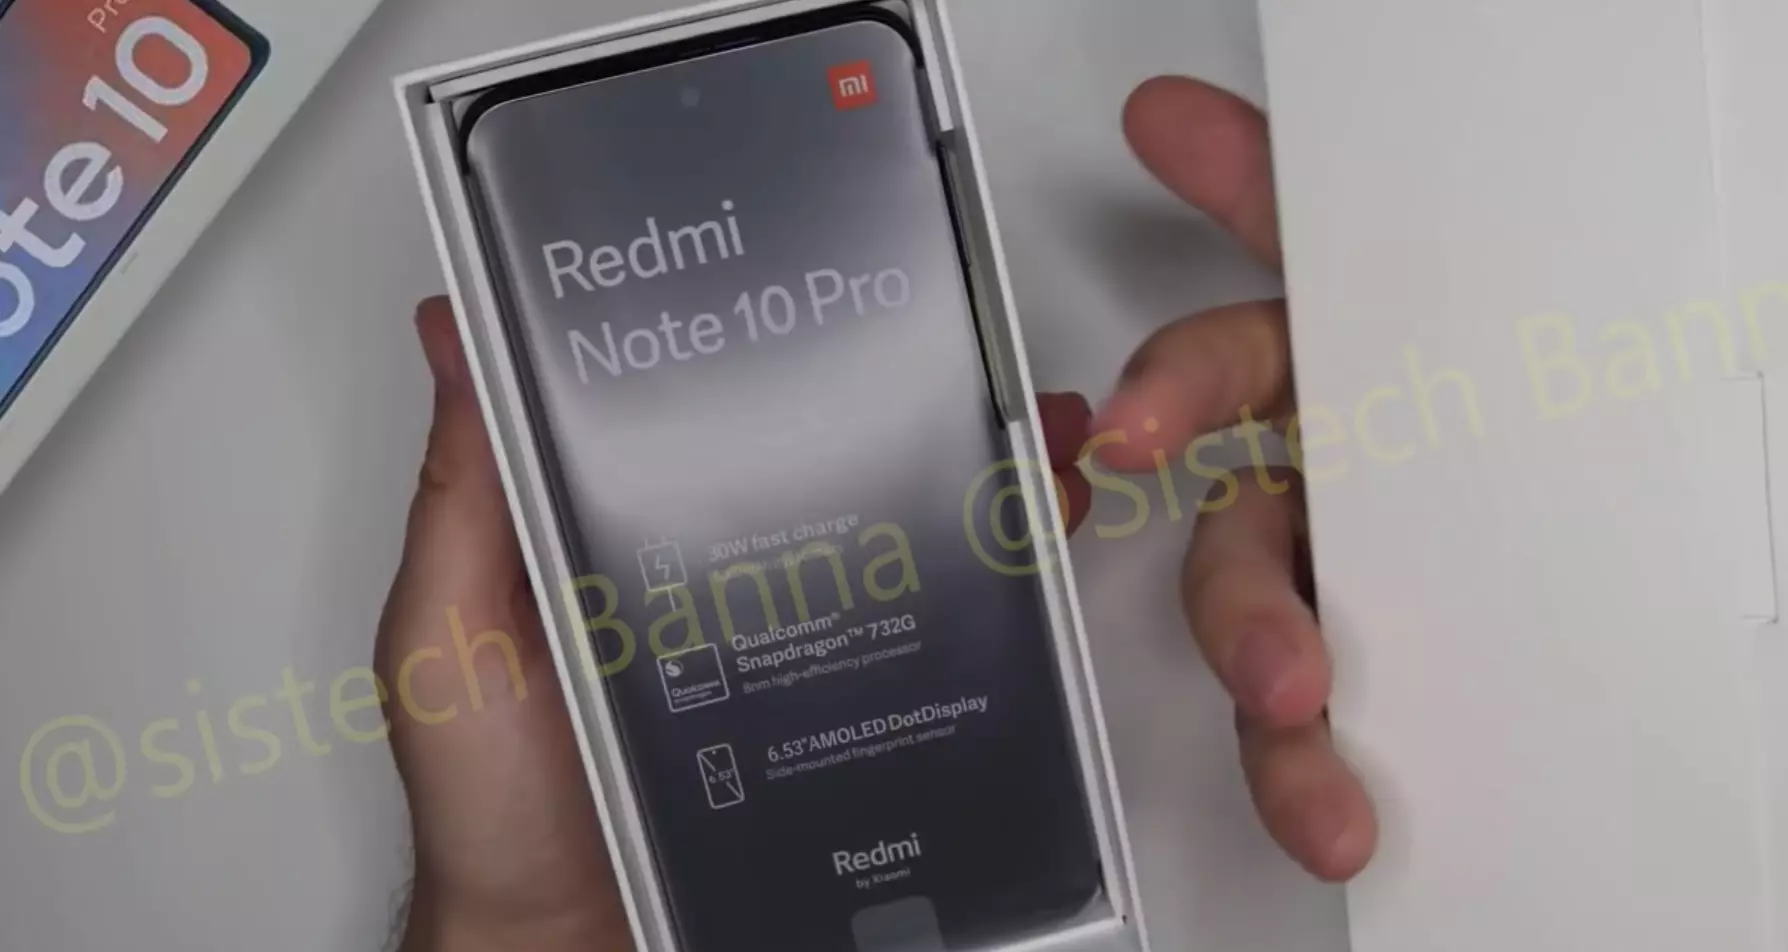 Redmi Note 10 Pro retail box image